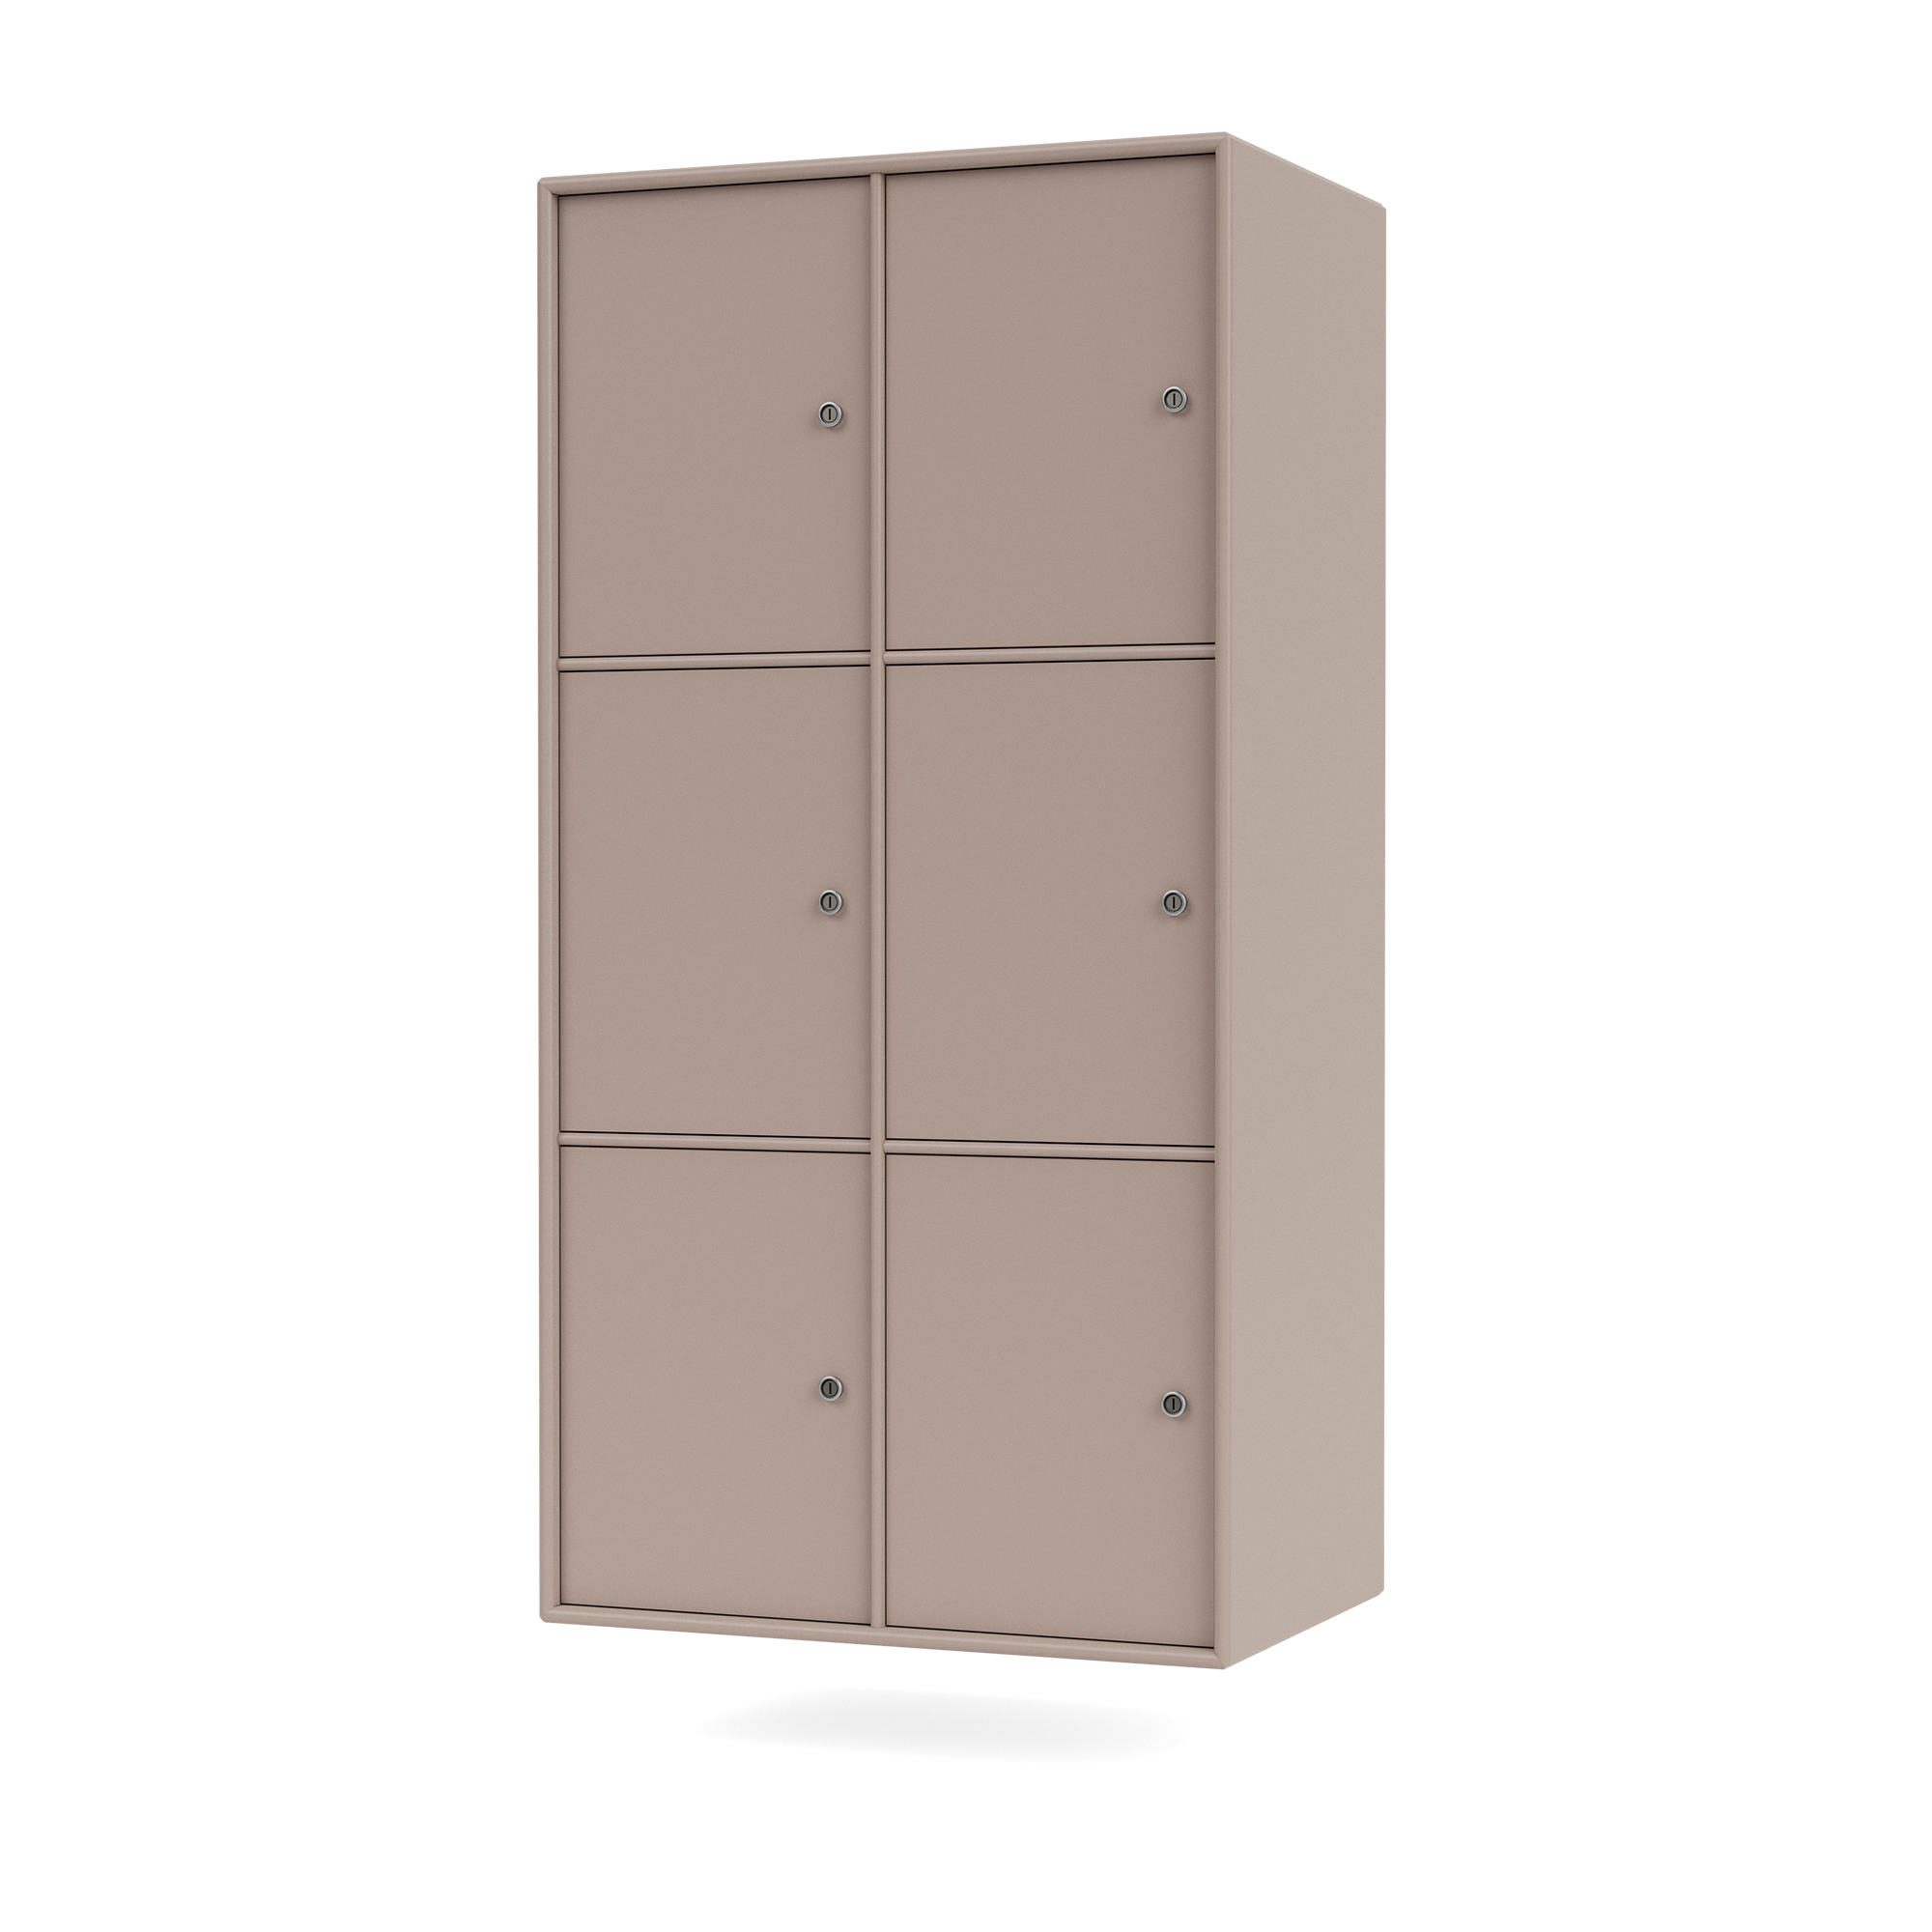 Locker L1224 – Personal storage 6 doors | Montana Furniture